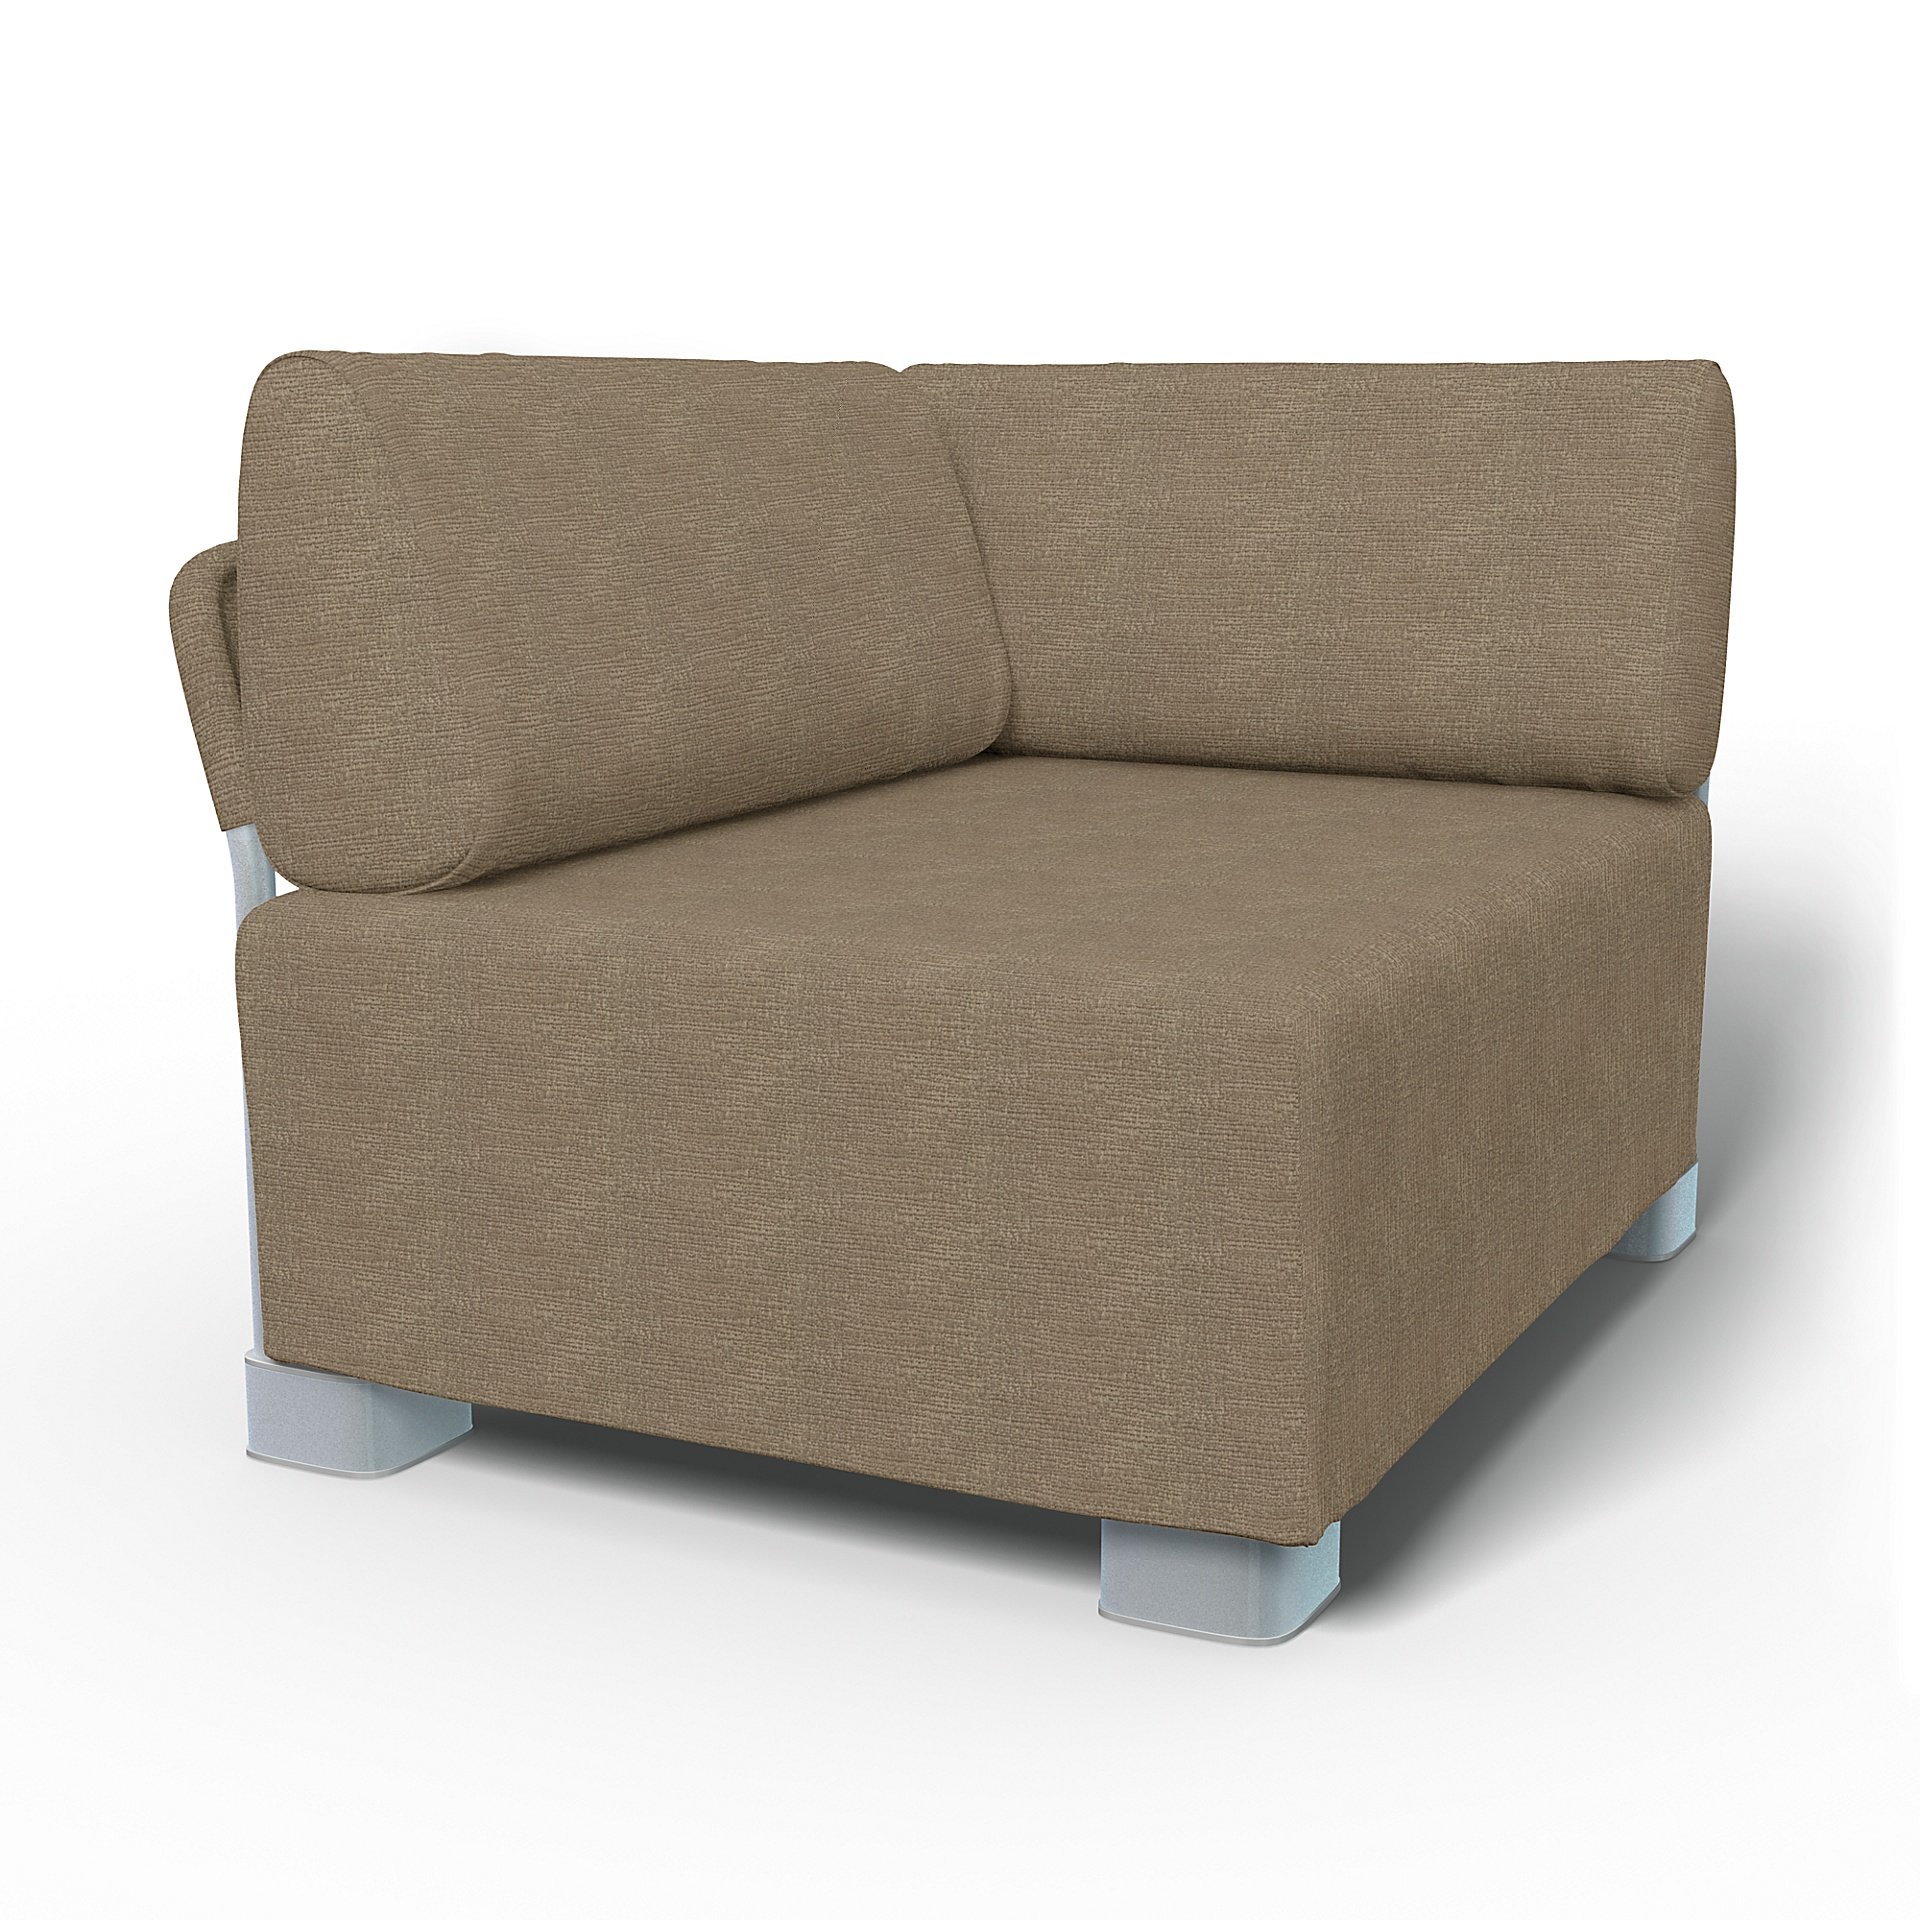 IKEA - Mysinge Corner Module Sofa Cover, Camel, Boucle & Texture - Bemz